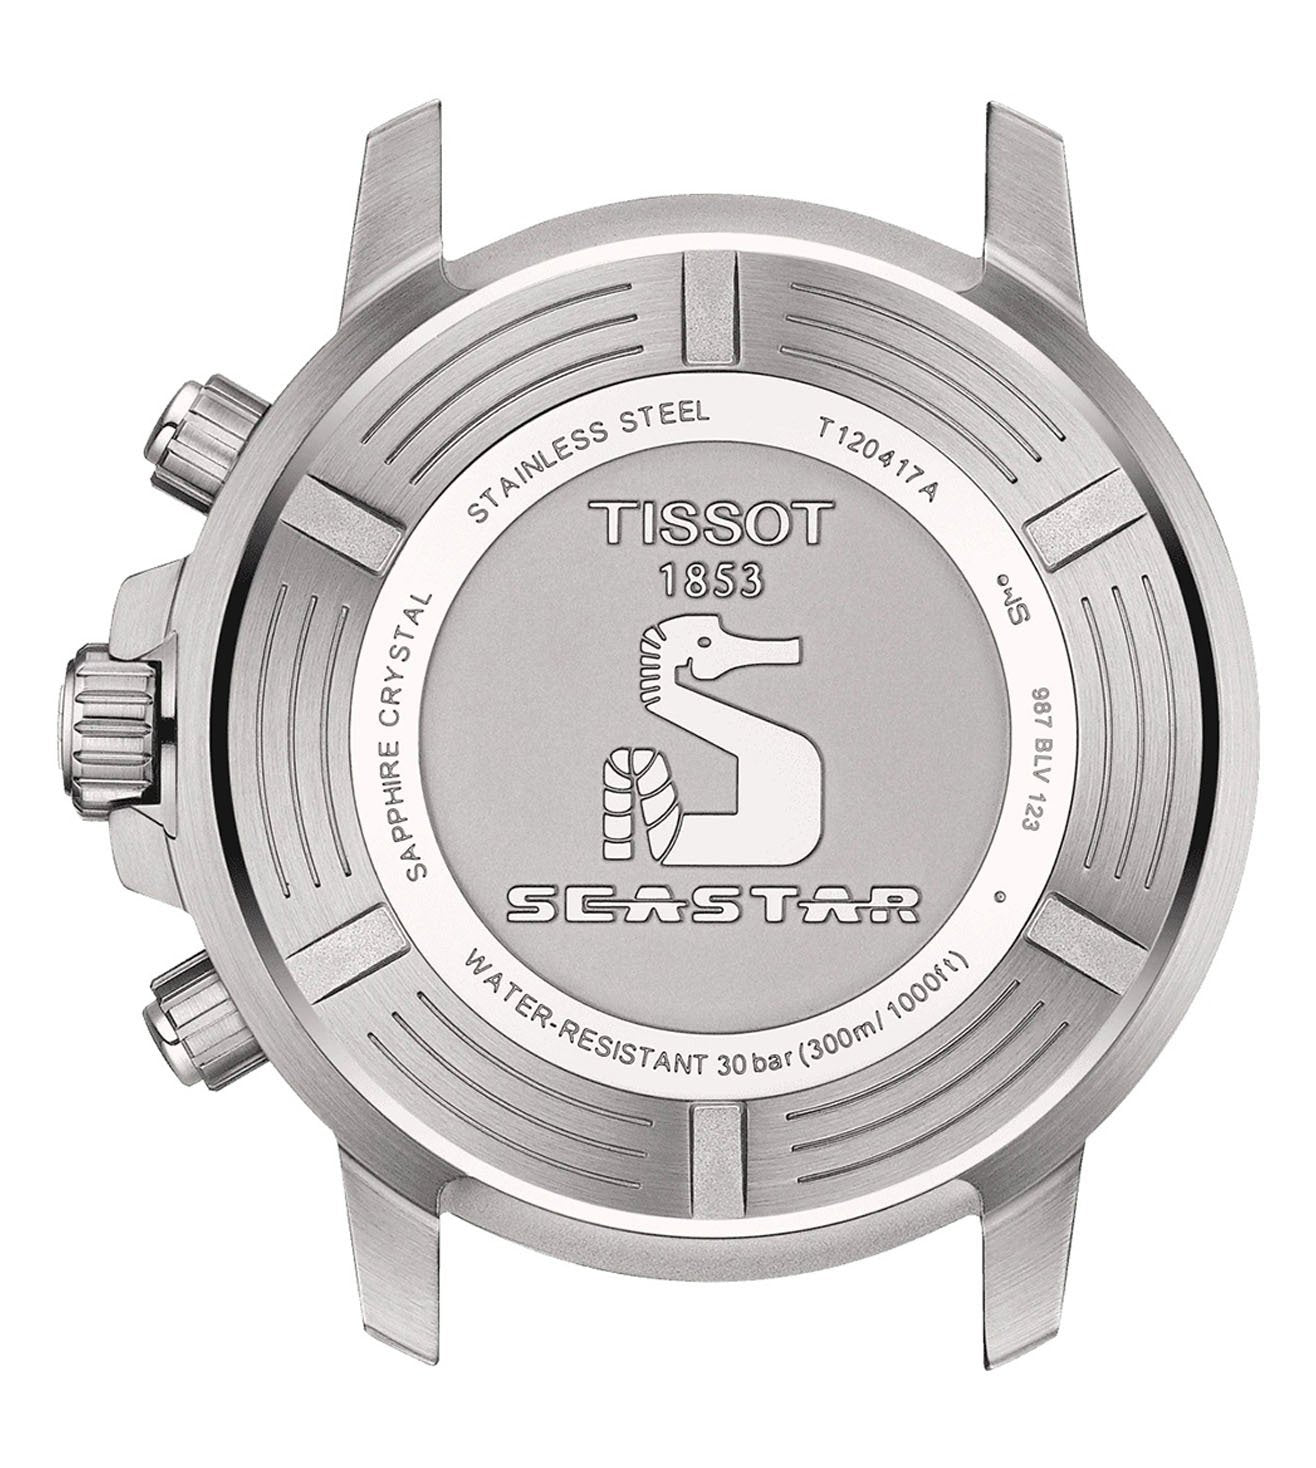 T1204171142100  |  TISSOT T-Sport Seastar 1000 Chronograph Watch for Men